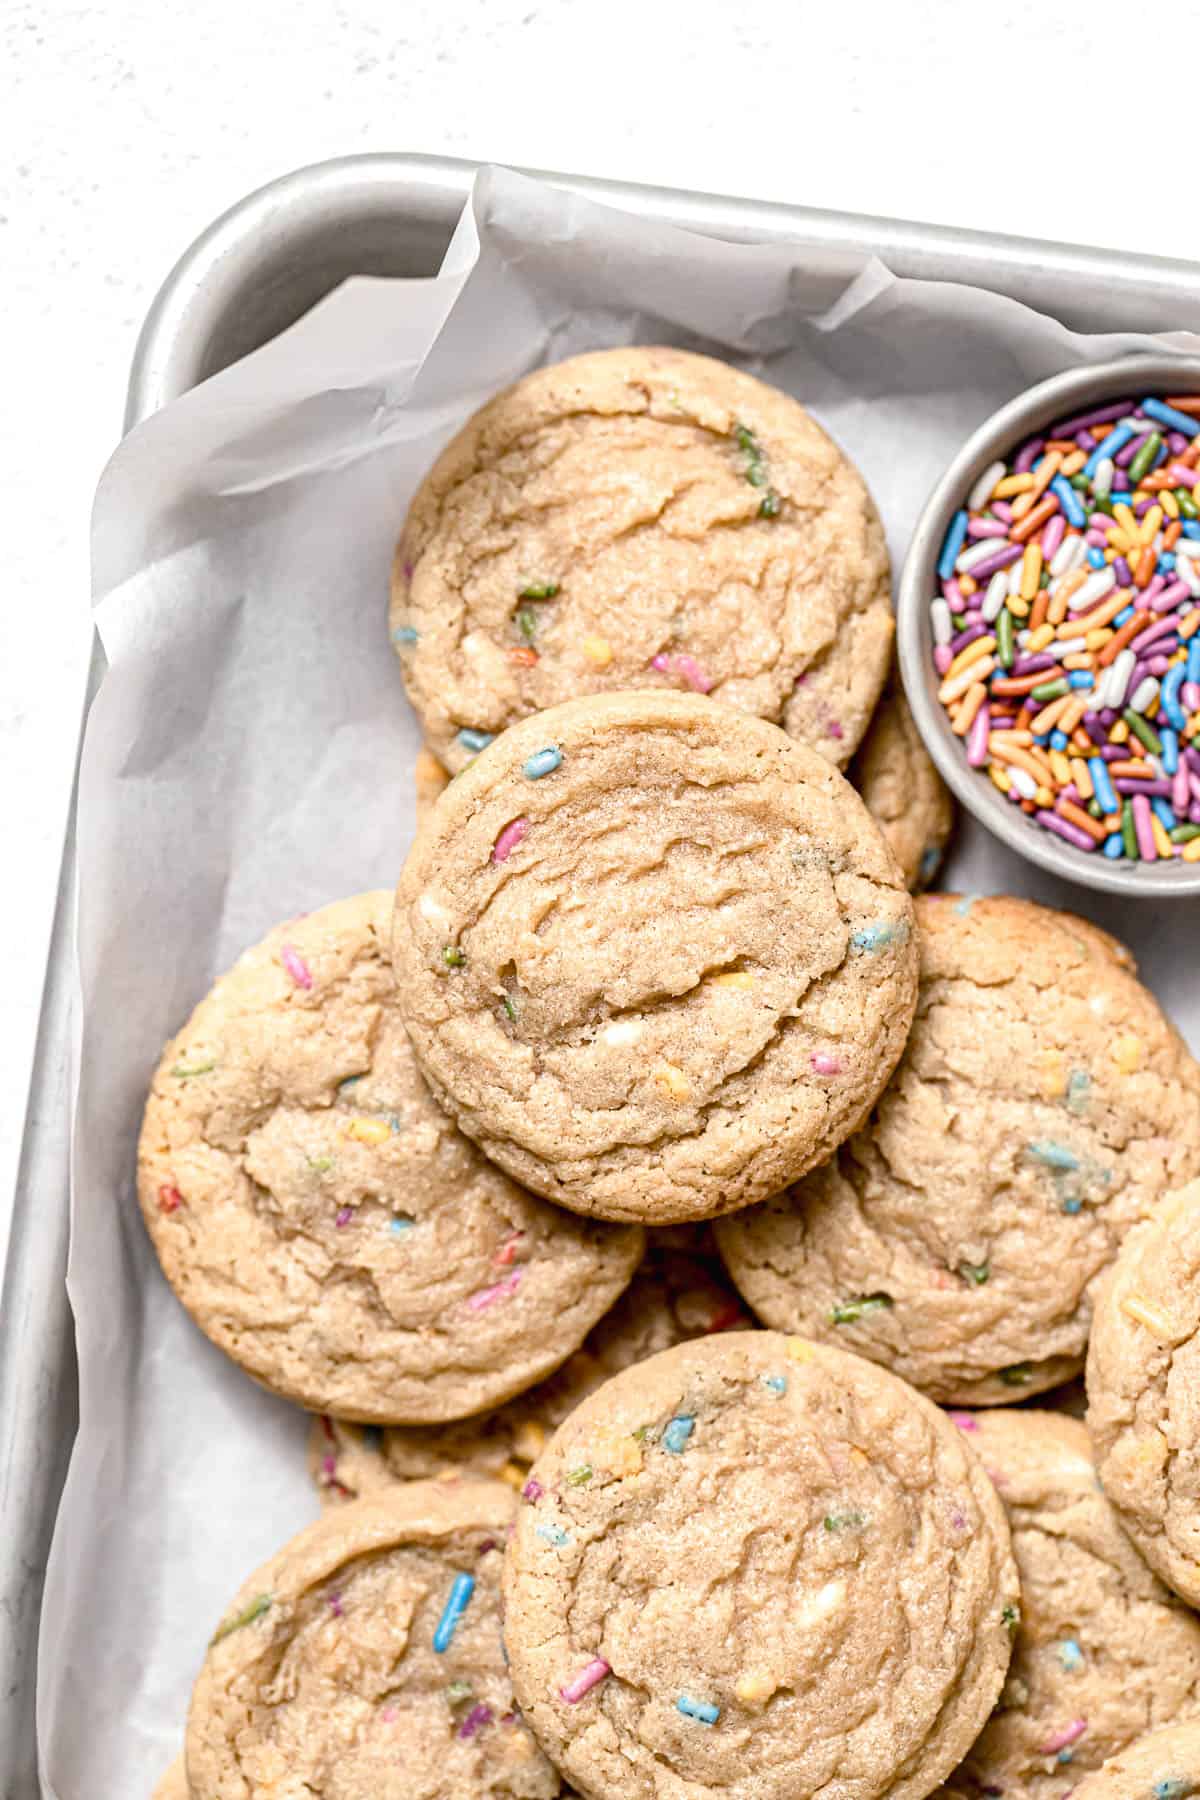 baked cookies on baking sheet.